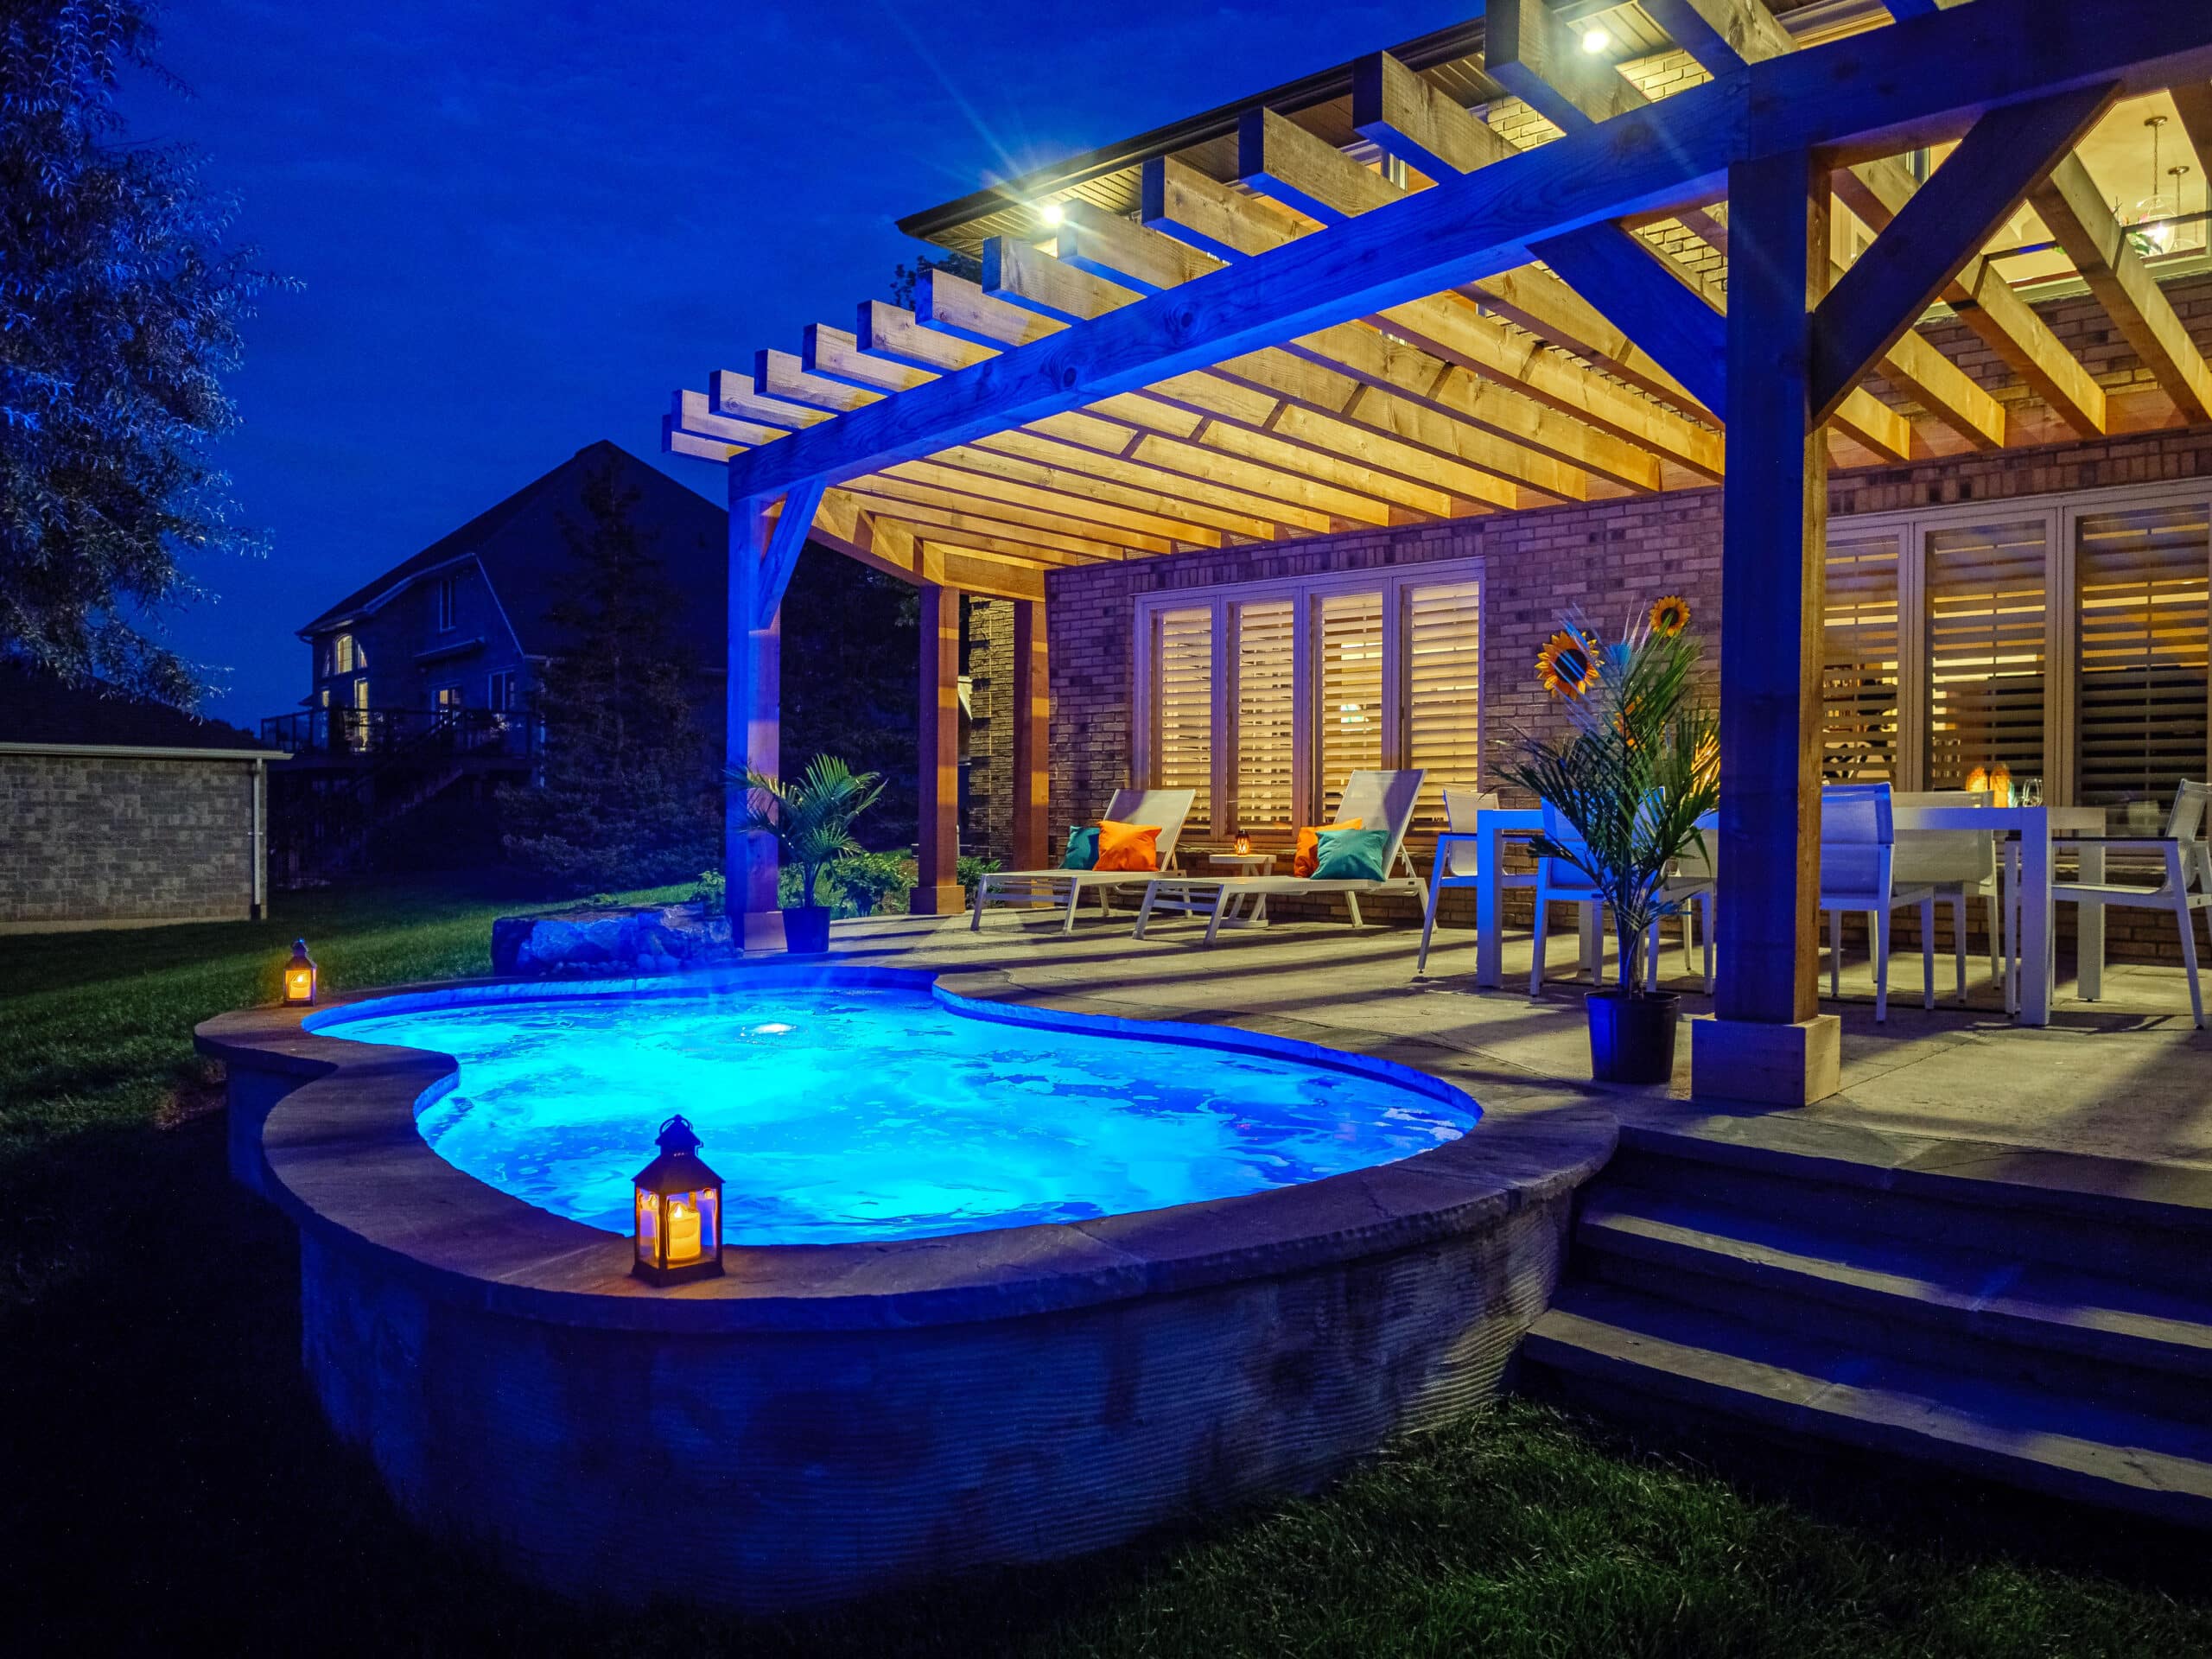 inground hot tub fiberglass pools Immerspa pool lit with blue lights